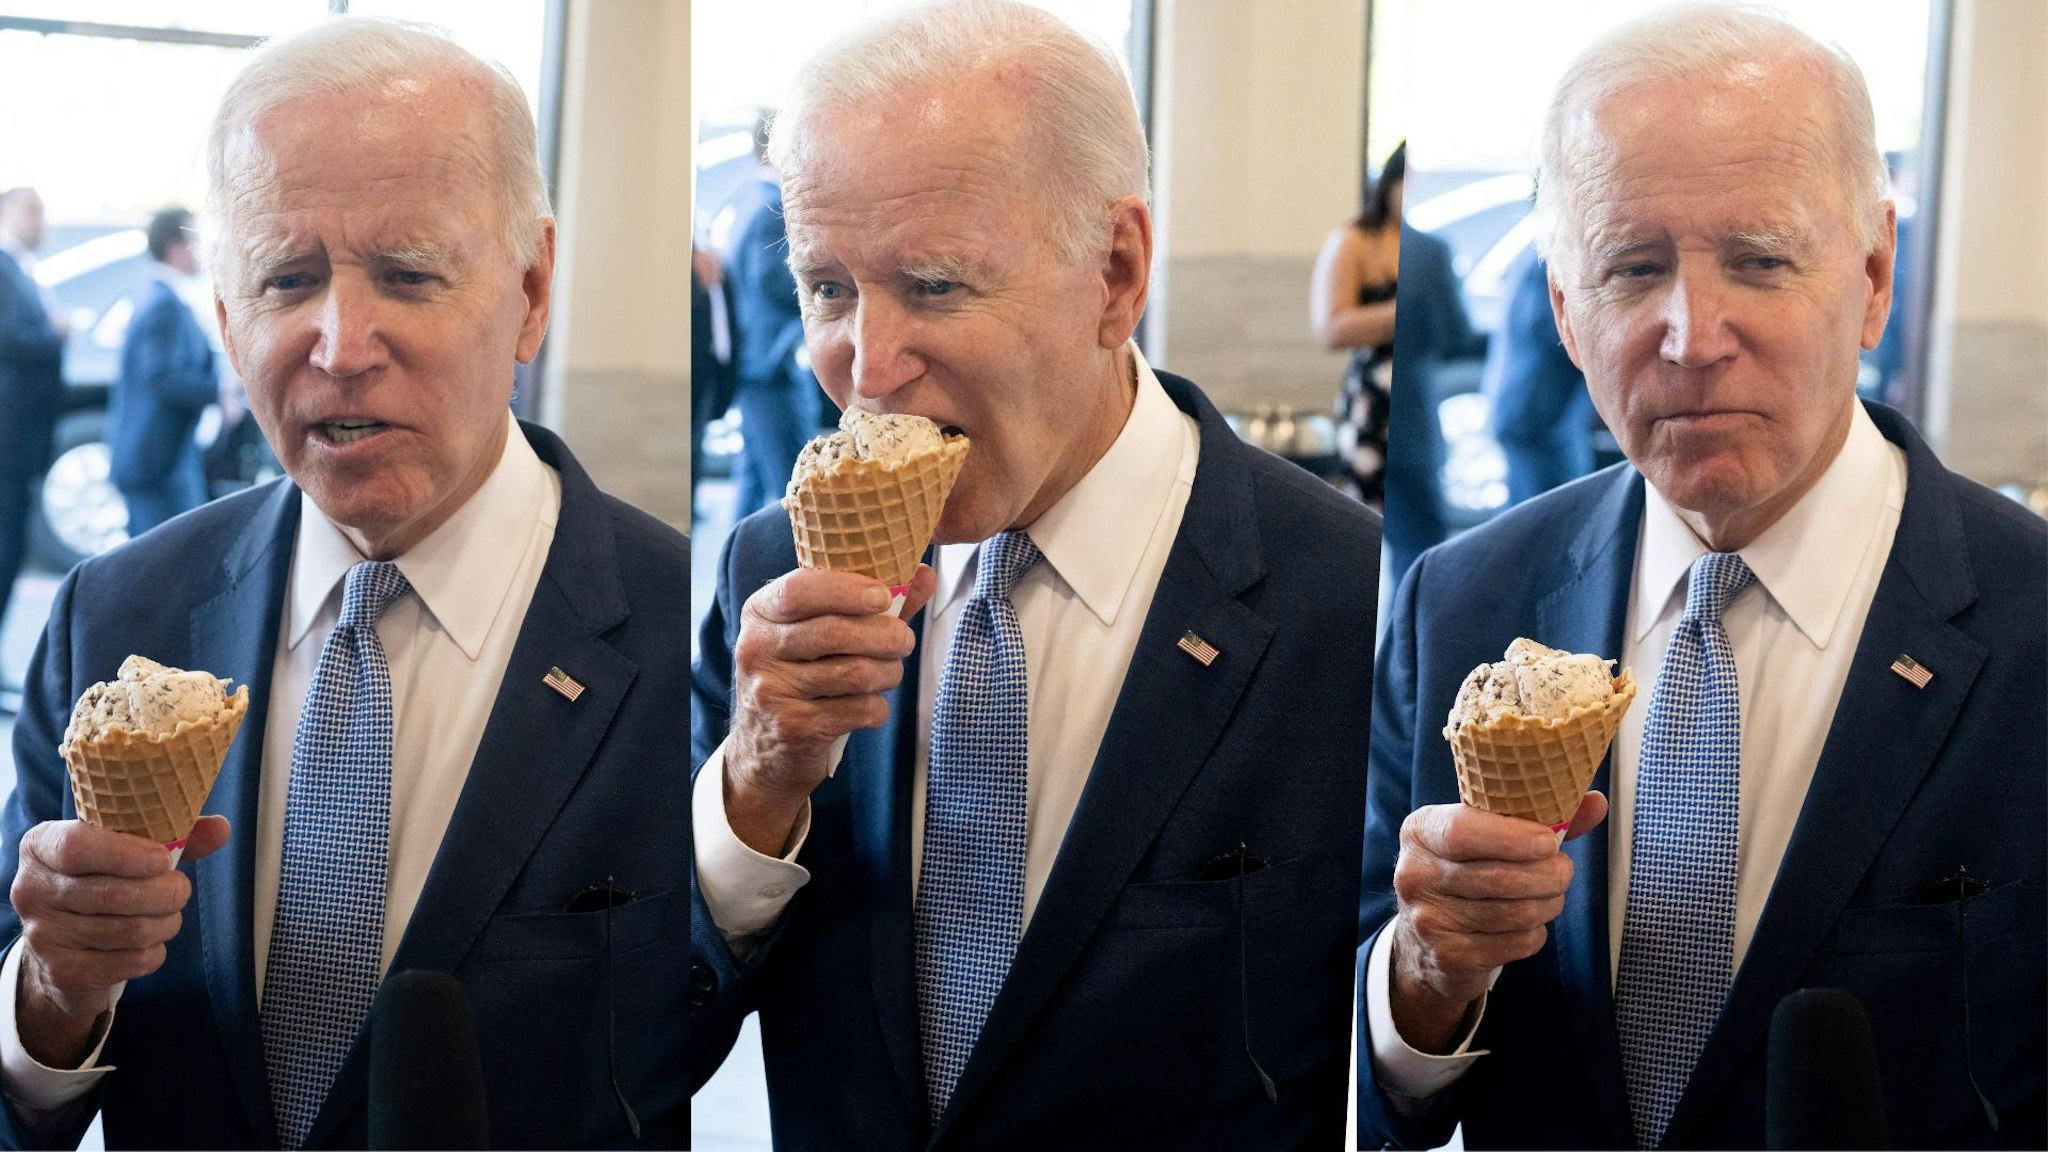 US President Joe Biden speaks to the press as he stops for ice cream at Baskin Robbins in Portland, Oregon, October 15, 2022.